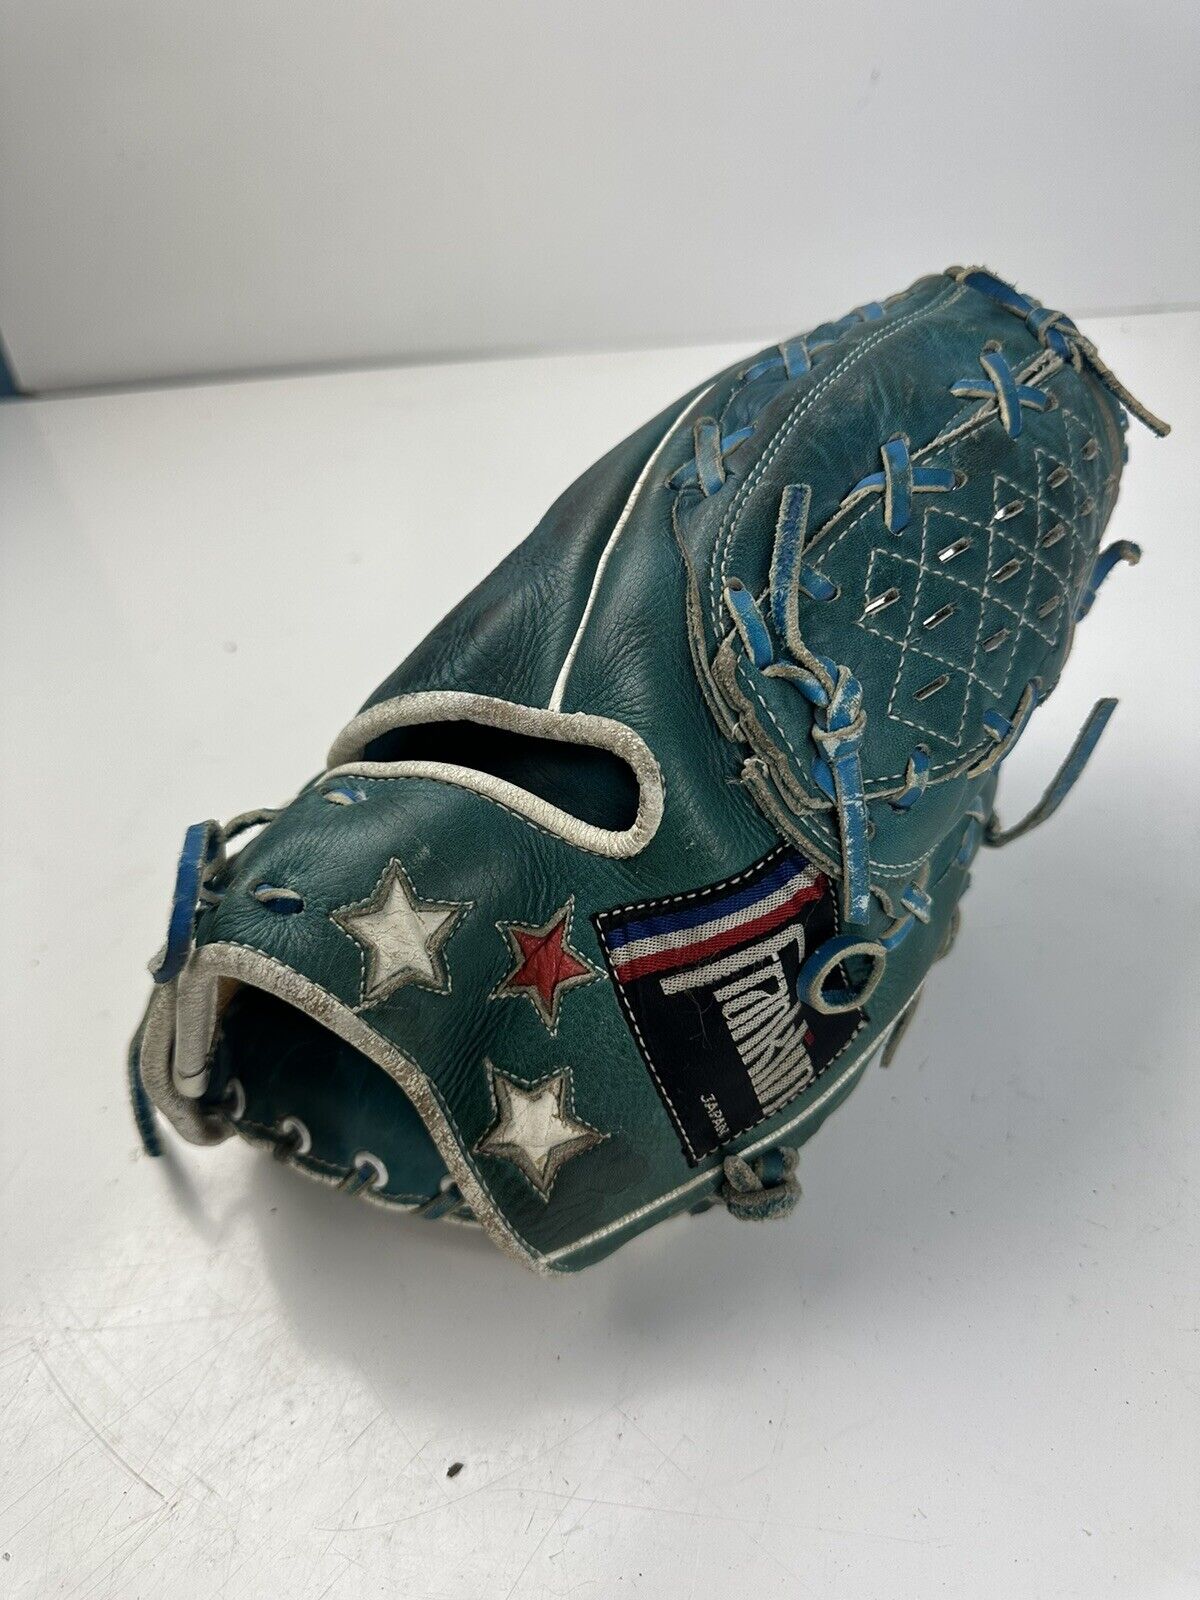 VTG Franklin Baseball Glove “The Backhander” Japan Leather Stars Green Lou Brock